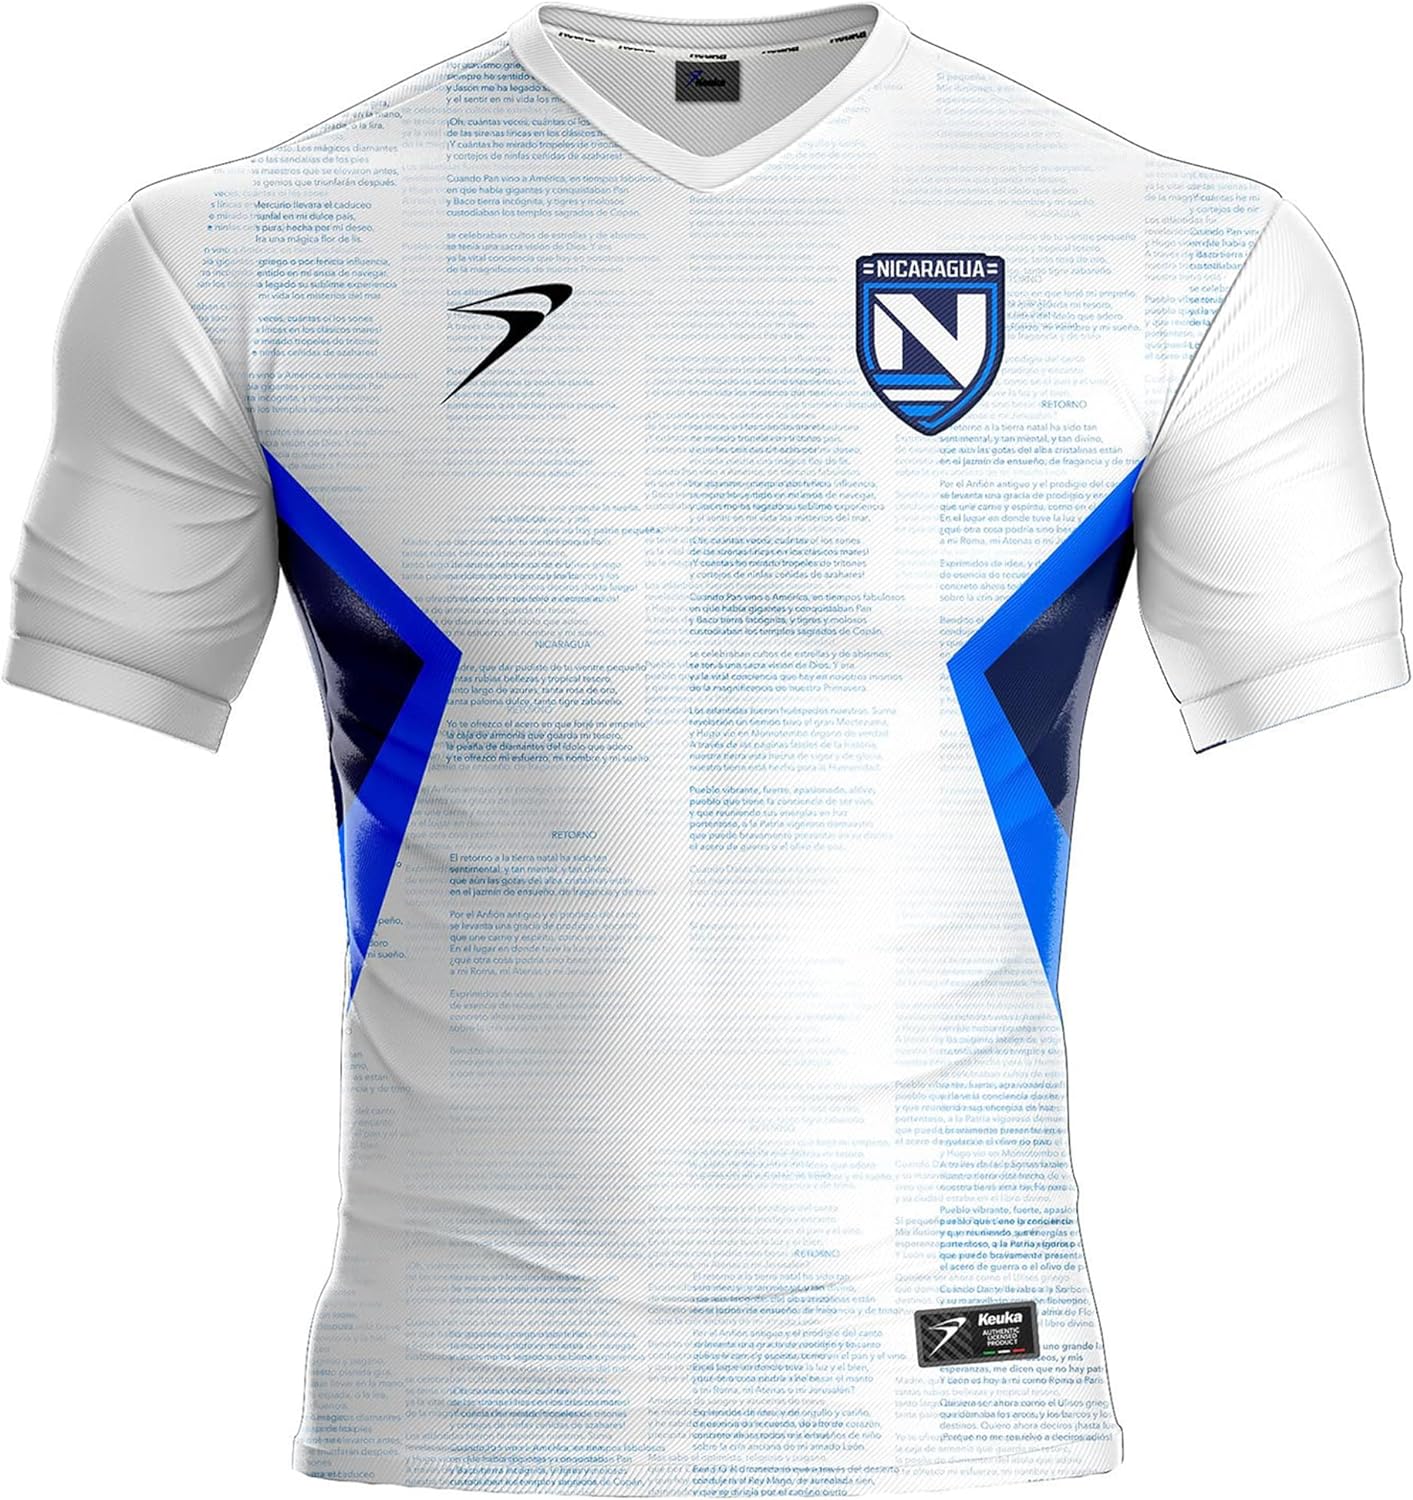 Nicaragua Men’s Official Soccer Jersey Home Uniform White Review